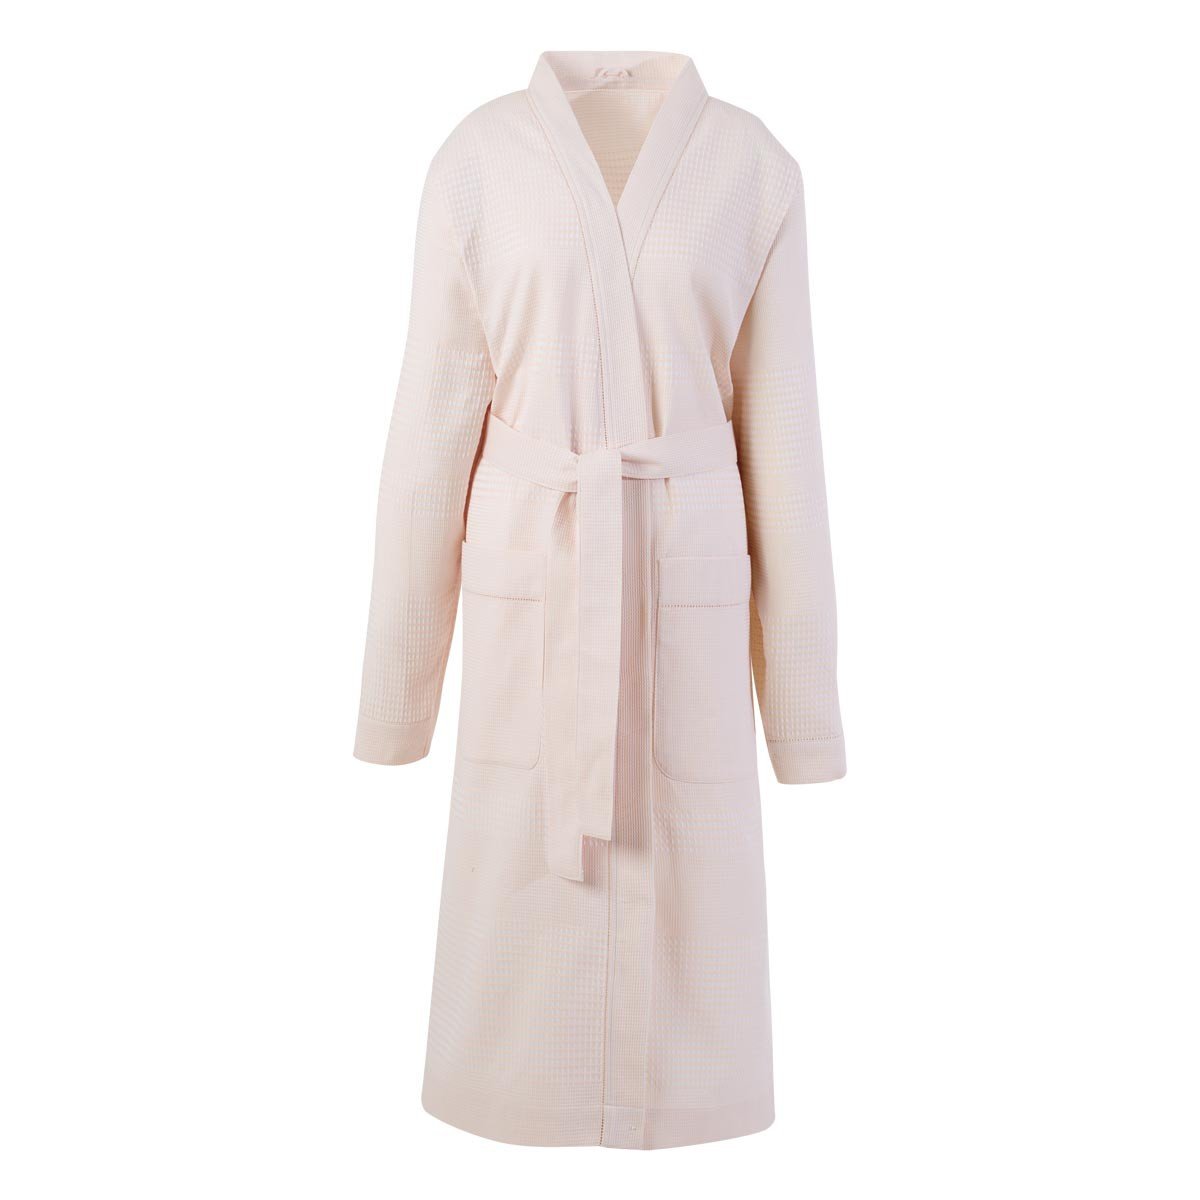 Volupté Pink Bathrobe by Le Jacquard Français | Fig Linens - Bath Robe with pockets and belt